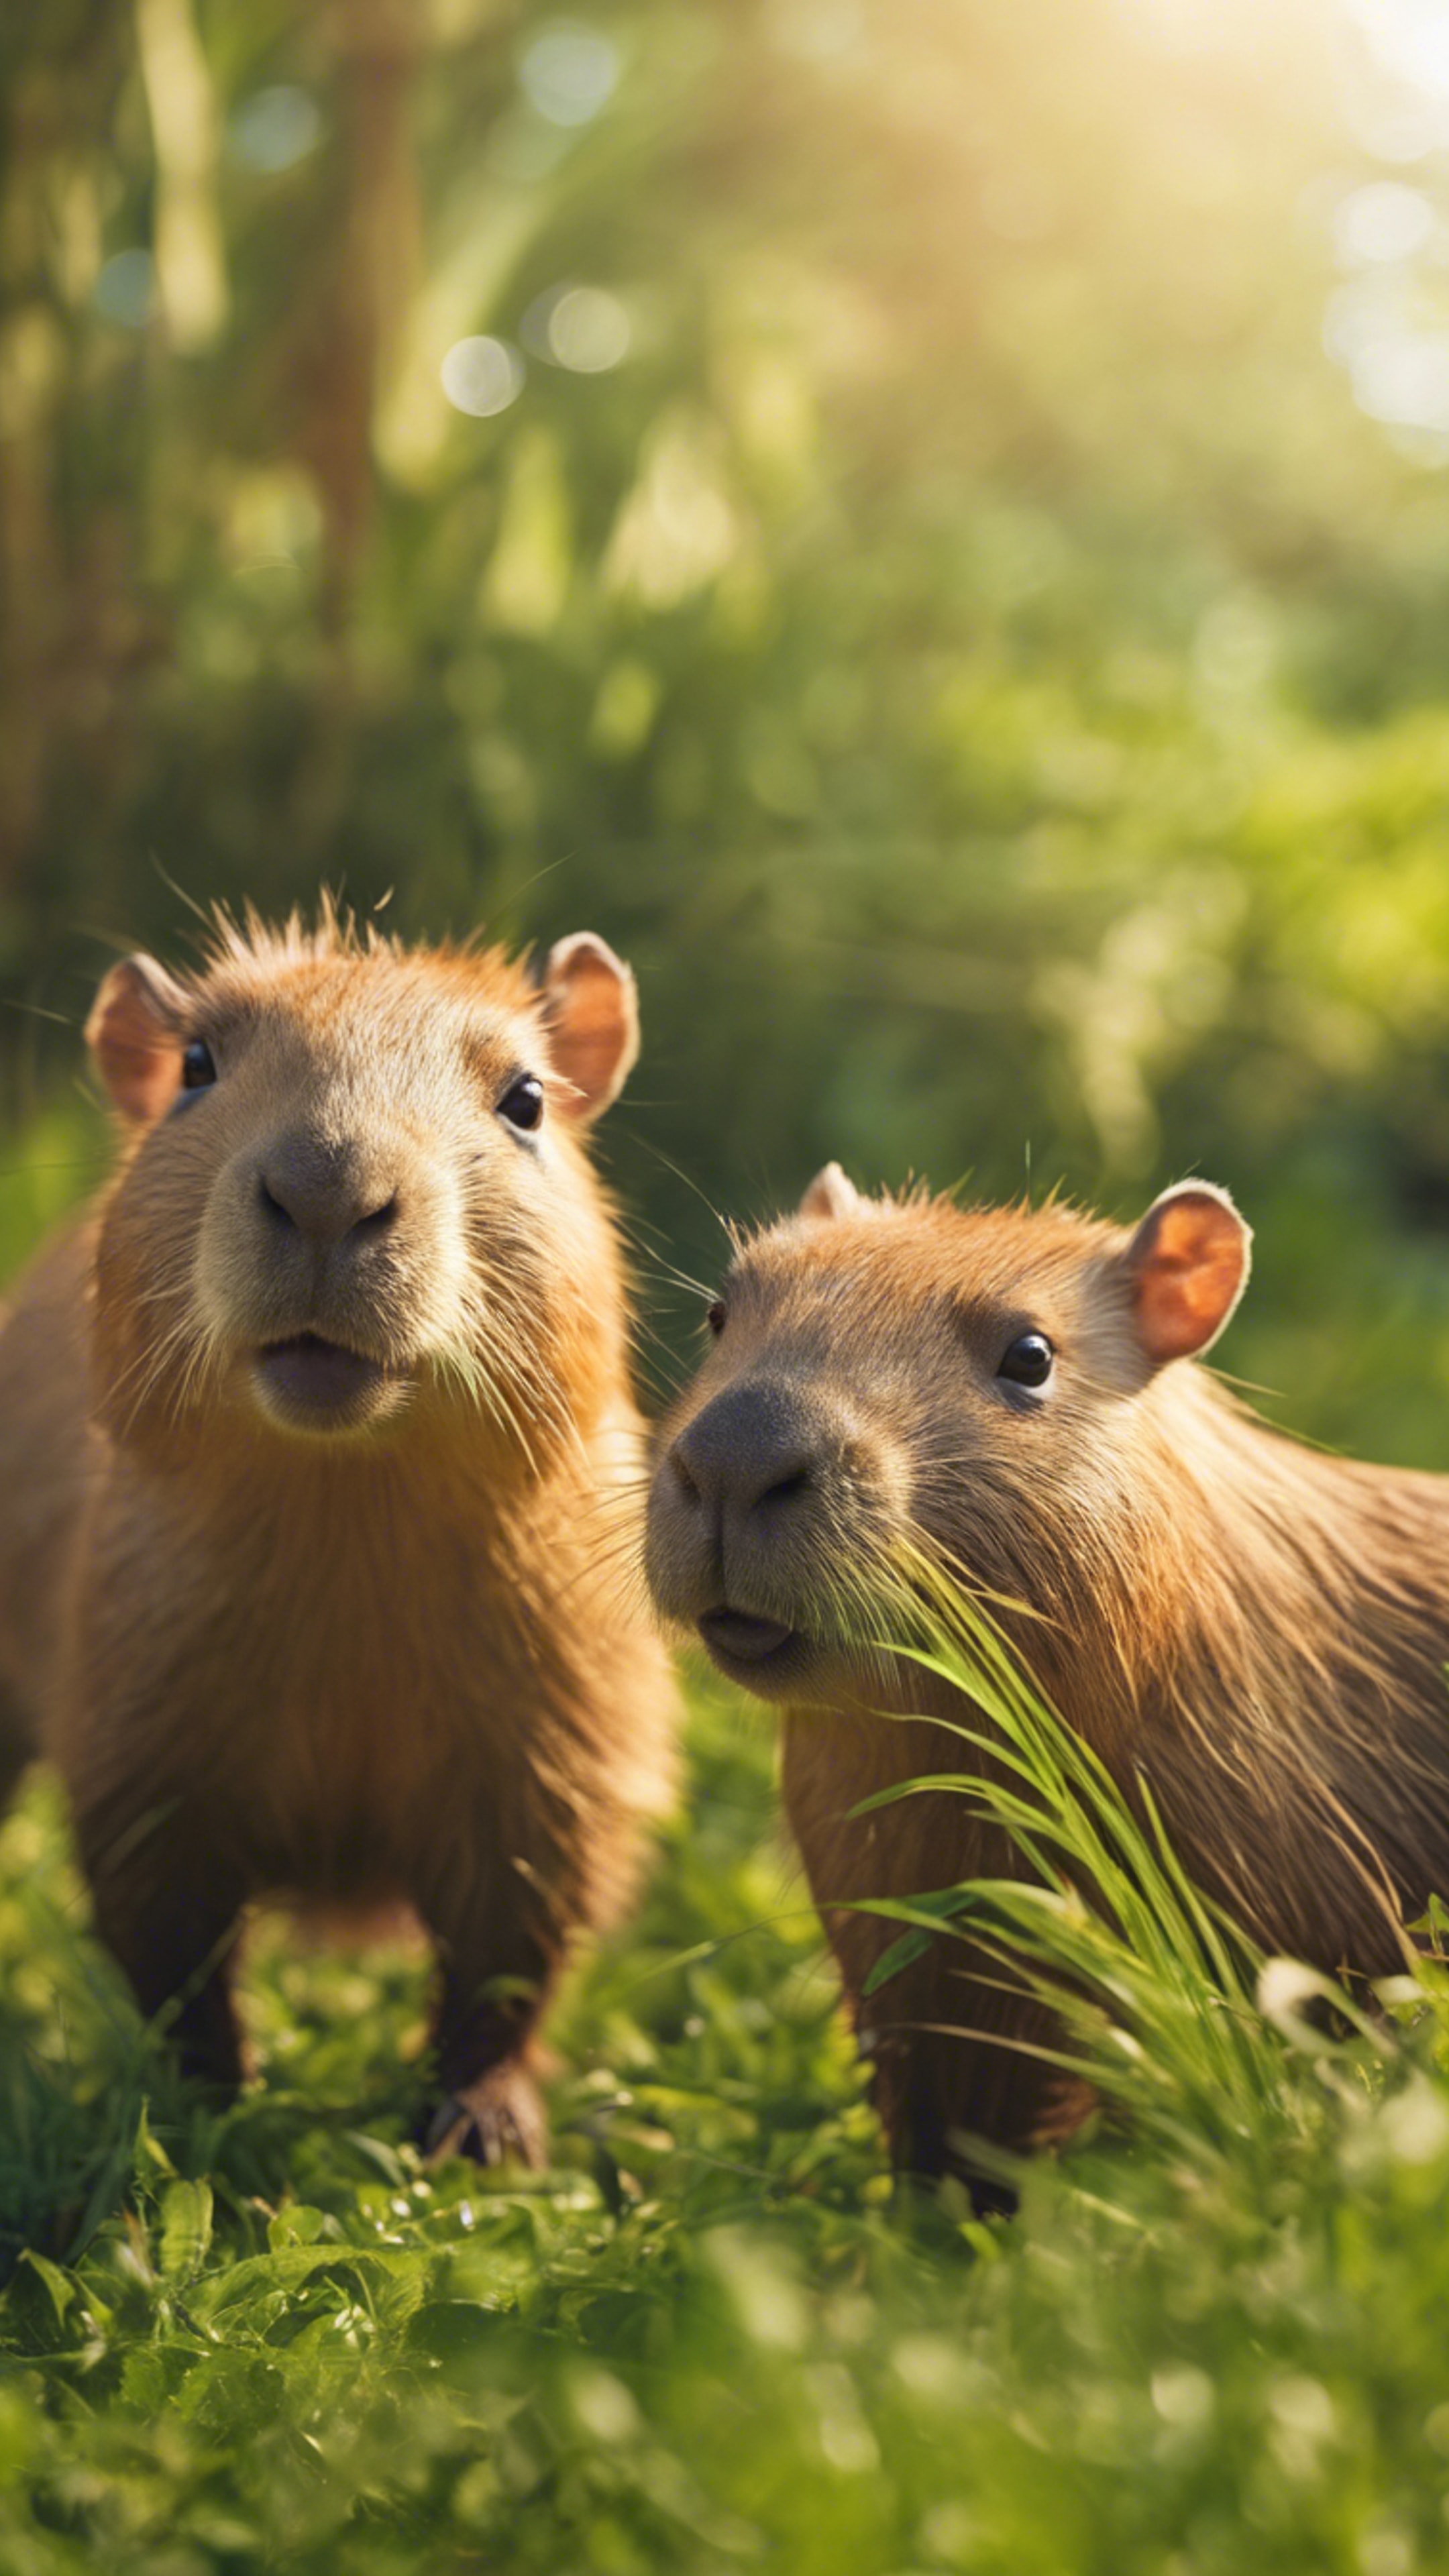 A group of playful capybara kids in a lush green meadow under the warm sunlight. ورق الجدران[941f99d4da544970bae4]